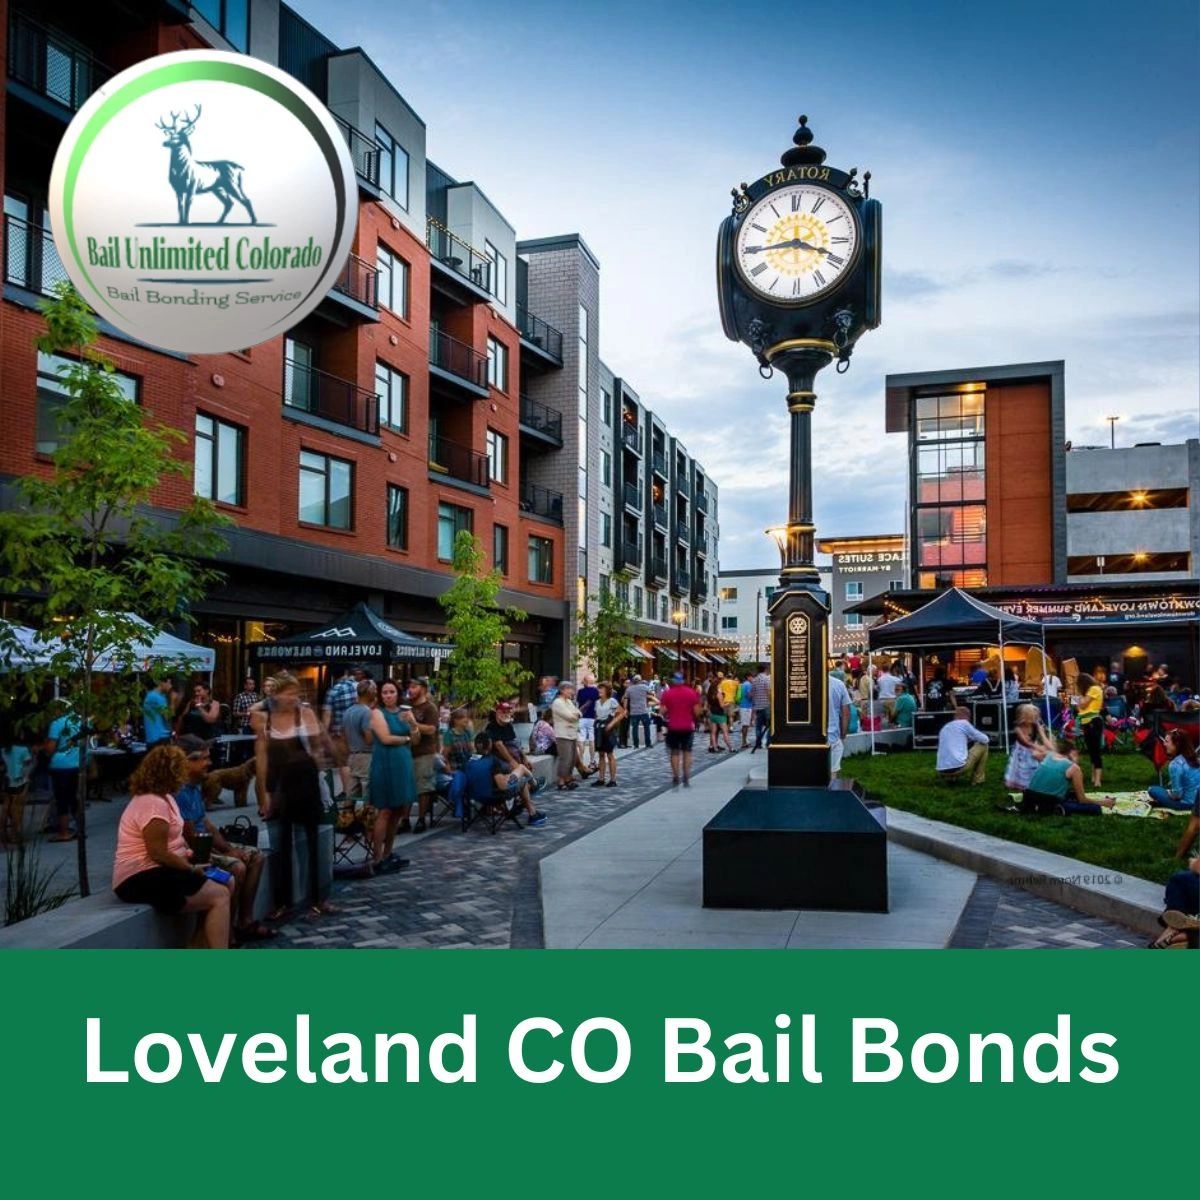 Loveland CO Bail Bonds LOGO Bail Unlimited Colorado Bail Bonding Services Image Downtown Loveland CO